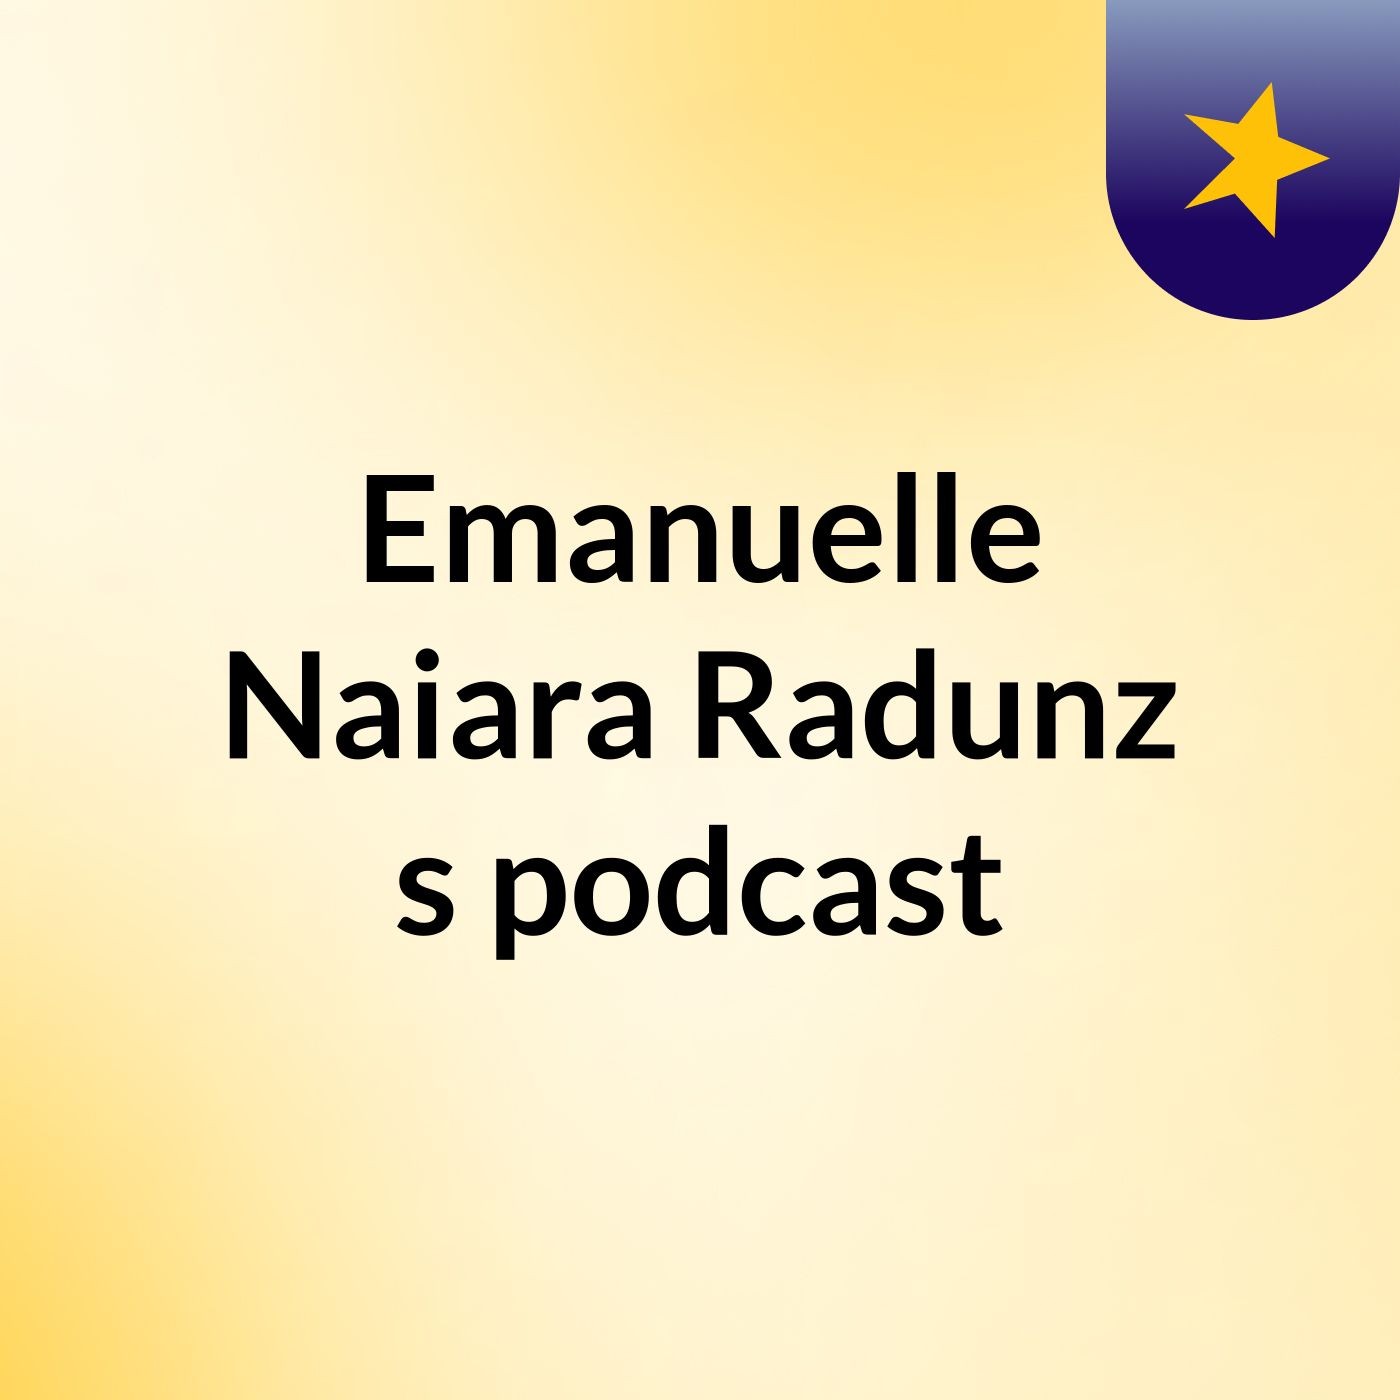 Emanuelle Naiara Radunz's podcast